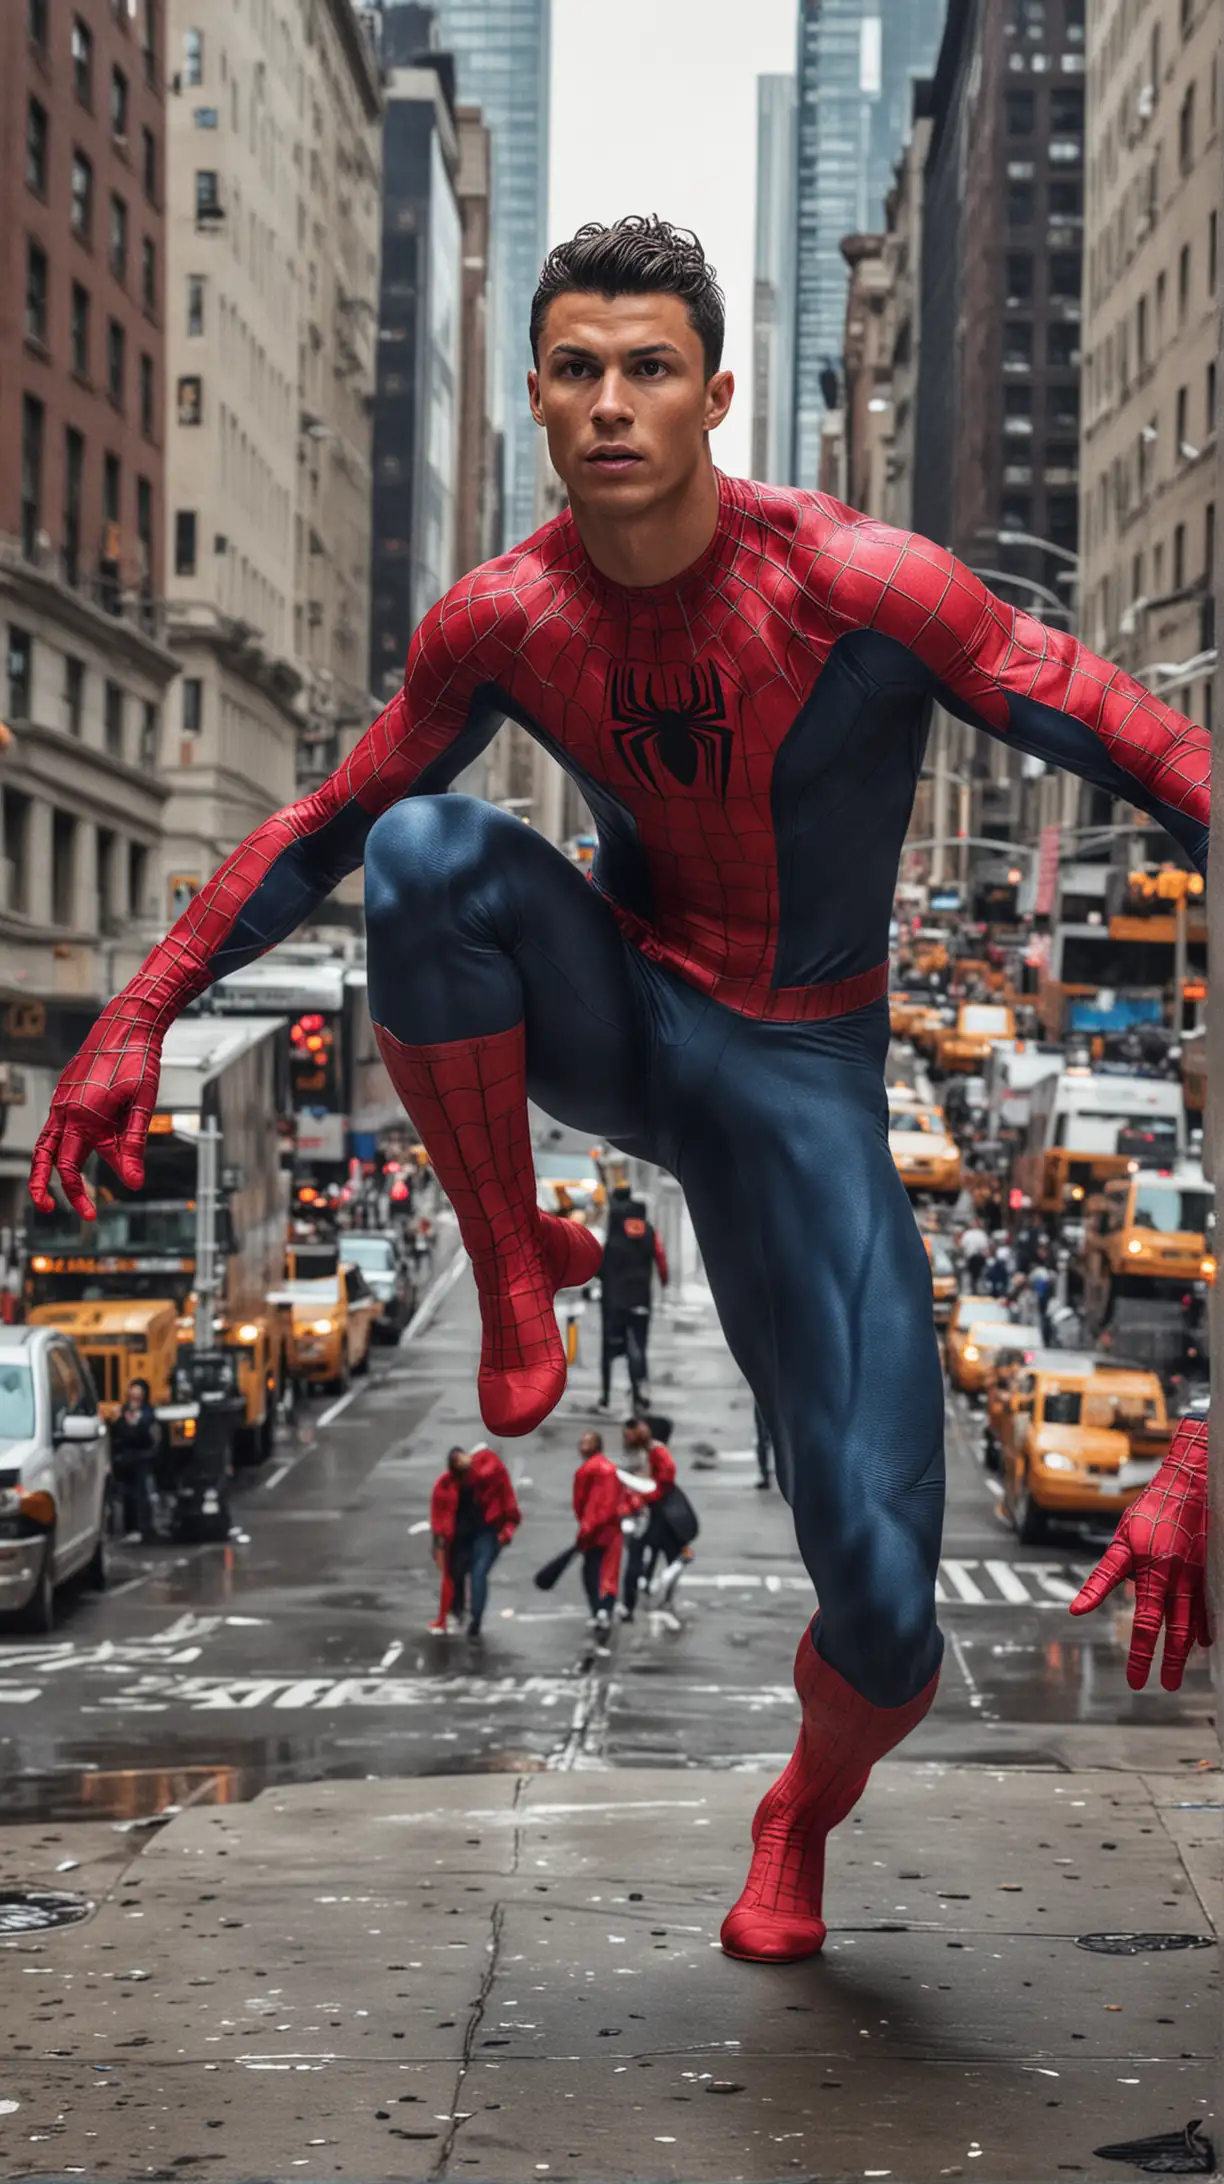 Cristiano Ronaldo as Spiderman in New York City Stunning 4K Image